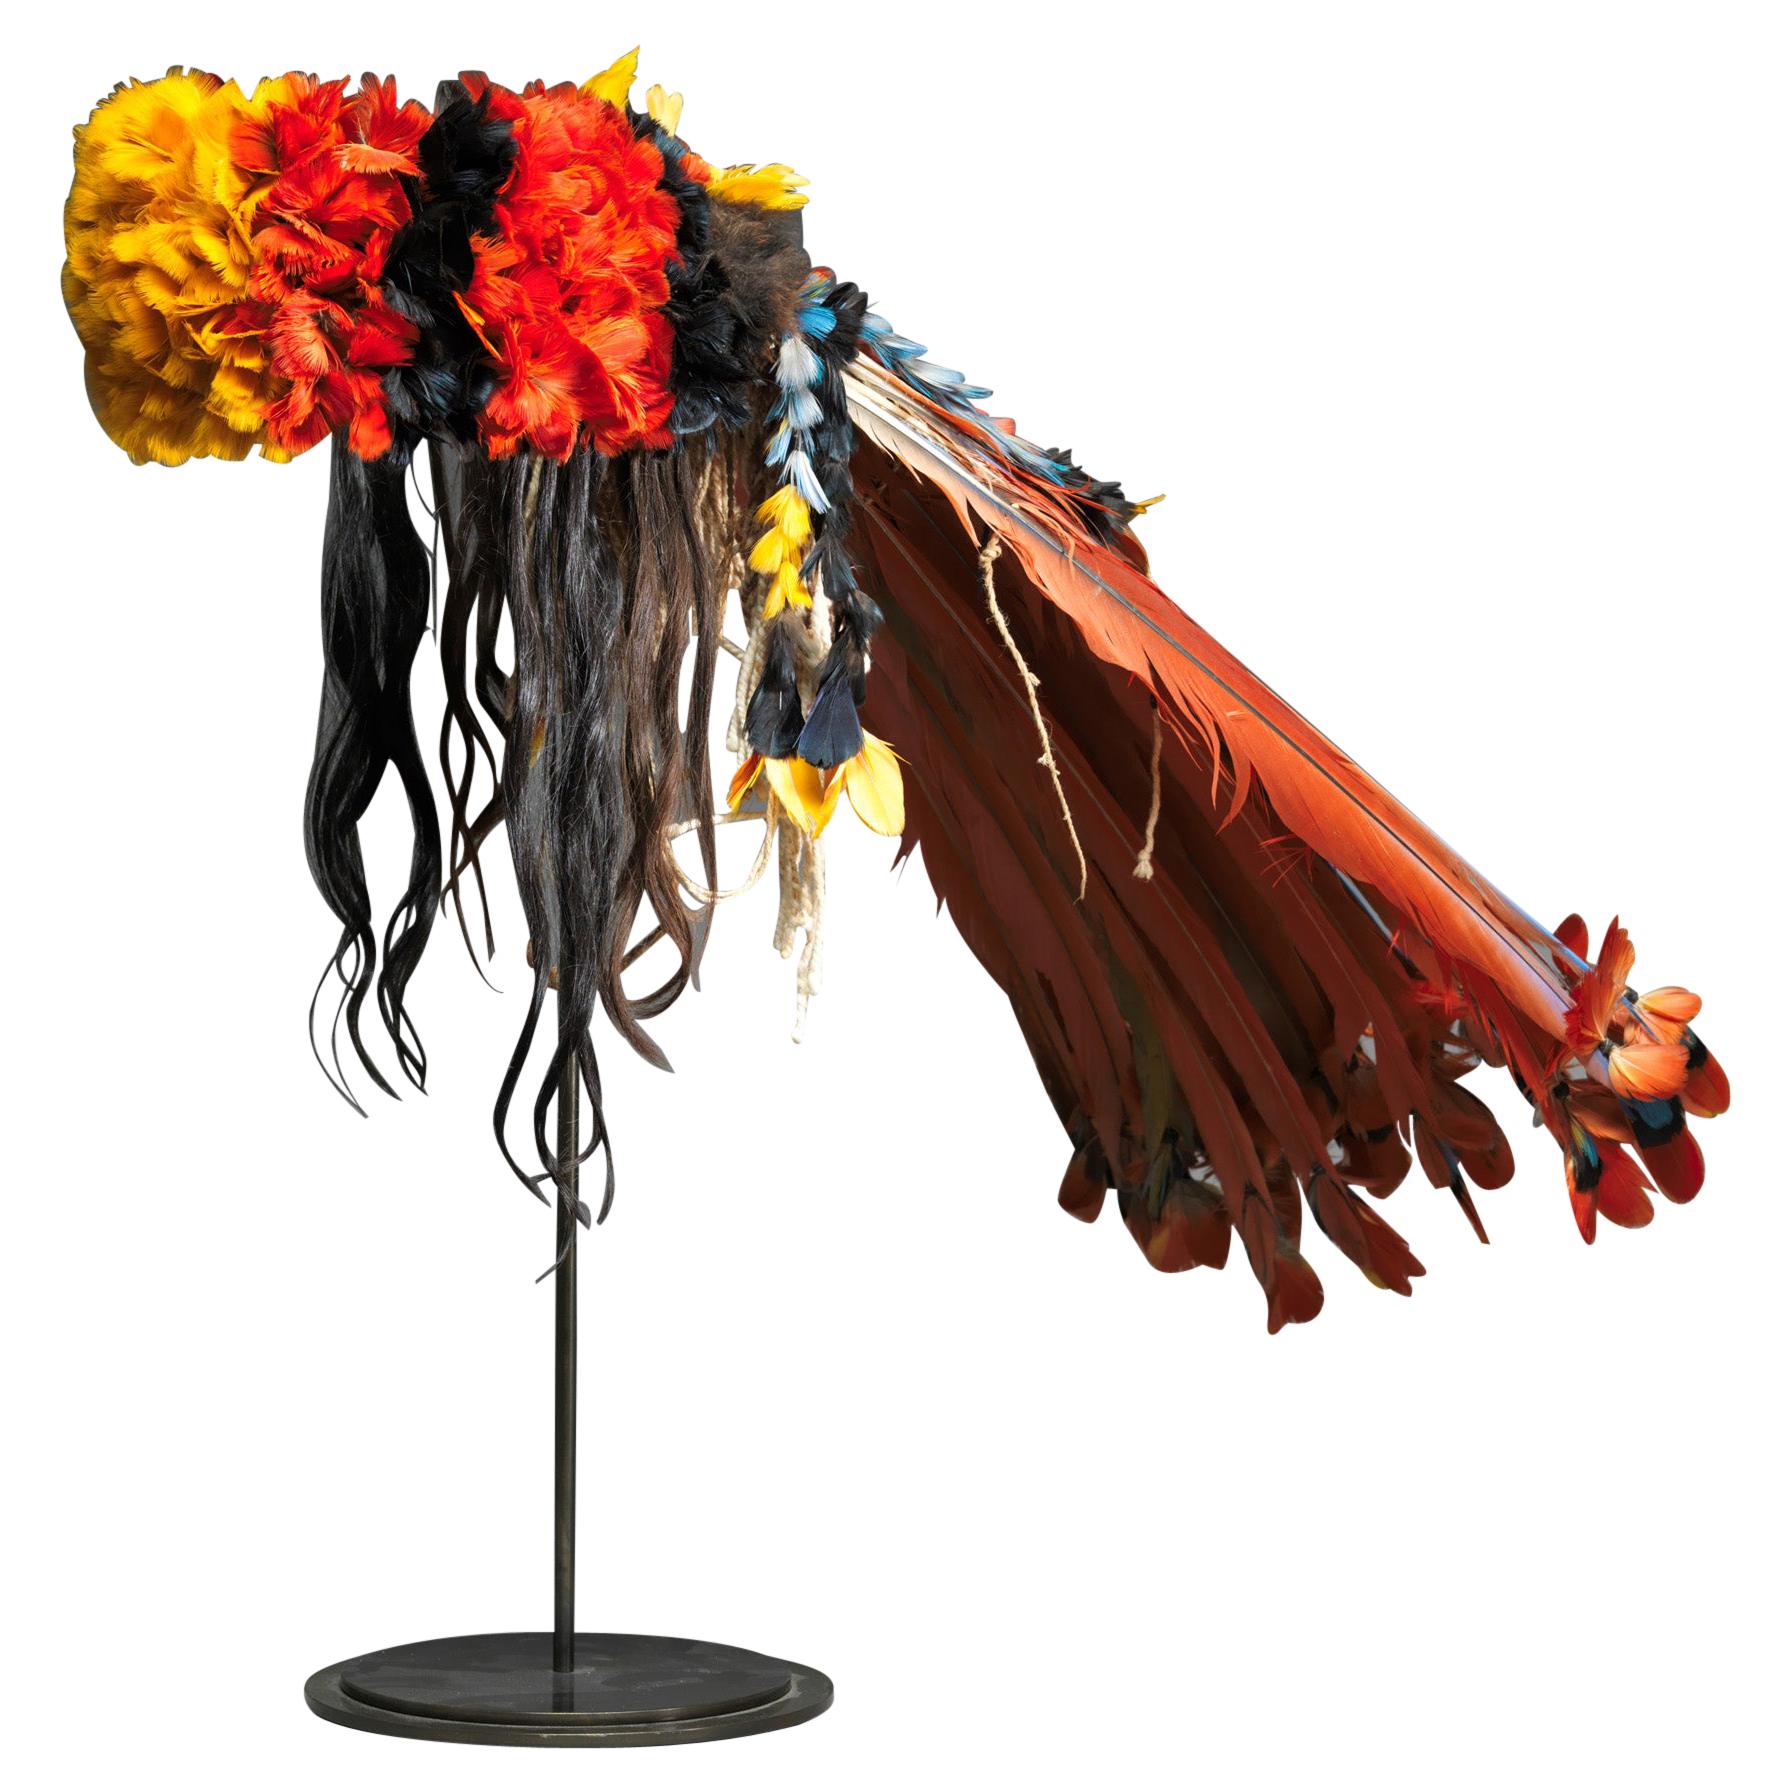 Colourful Neck Covering Headdress "Myhara" from the Rikbaktsa People in Brasil